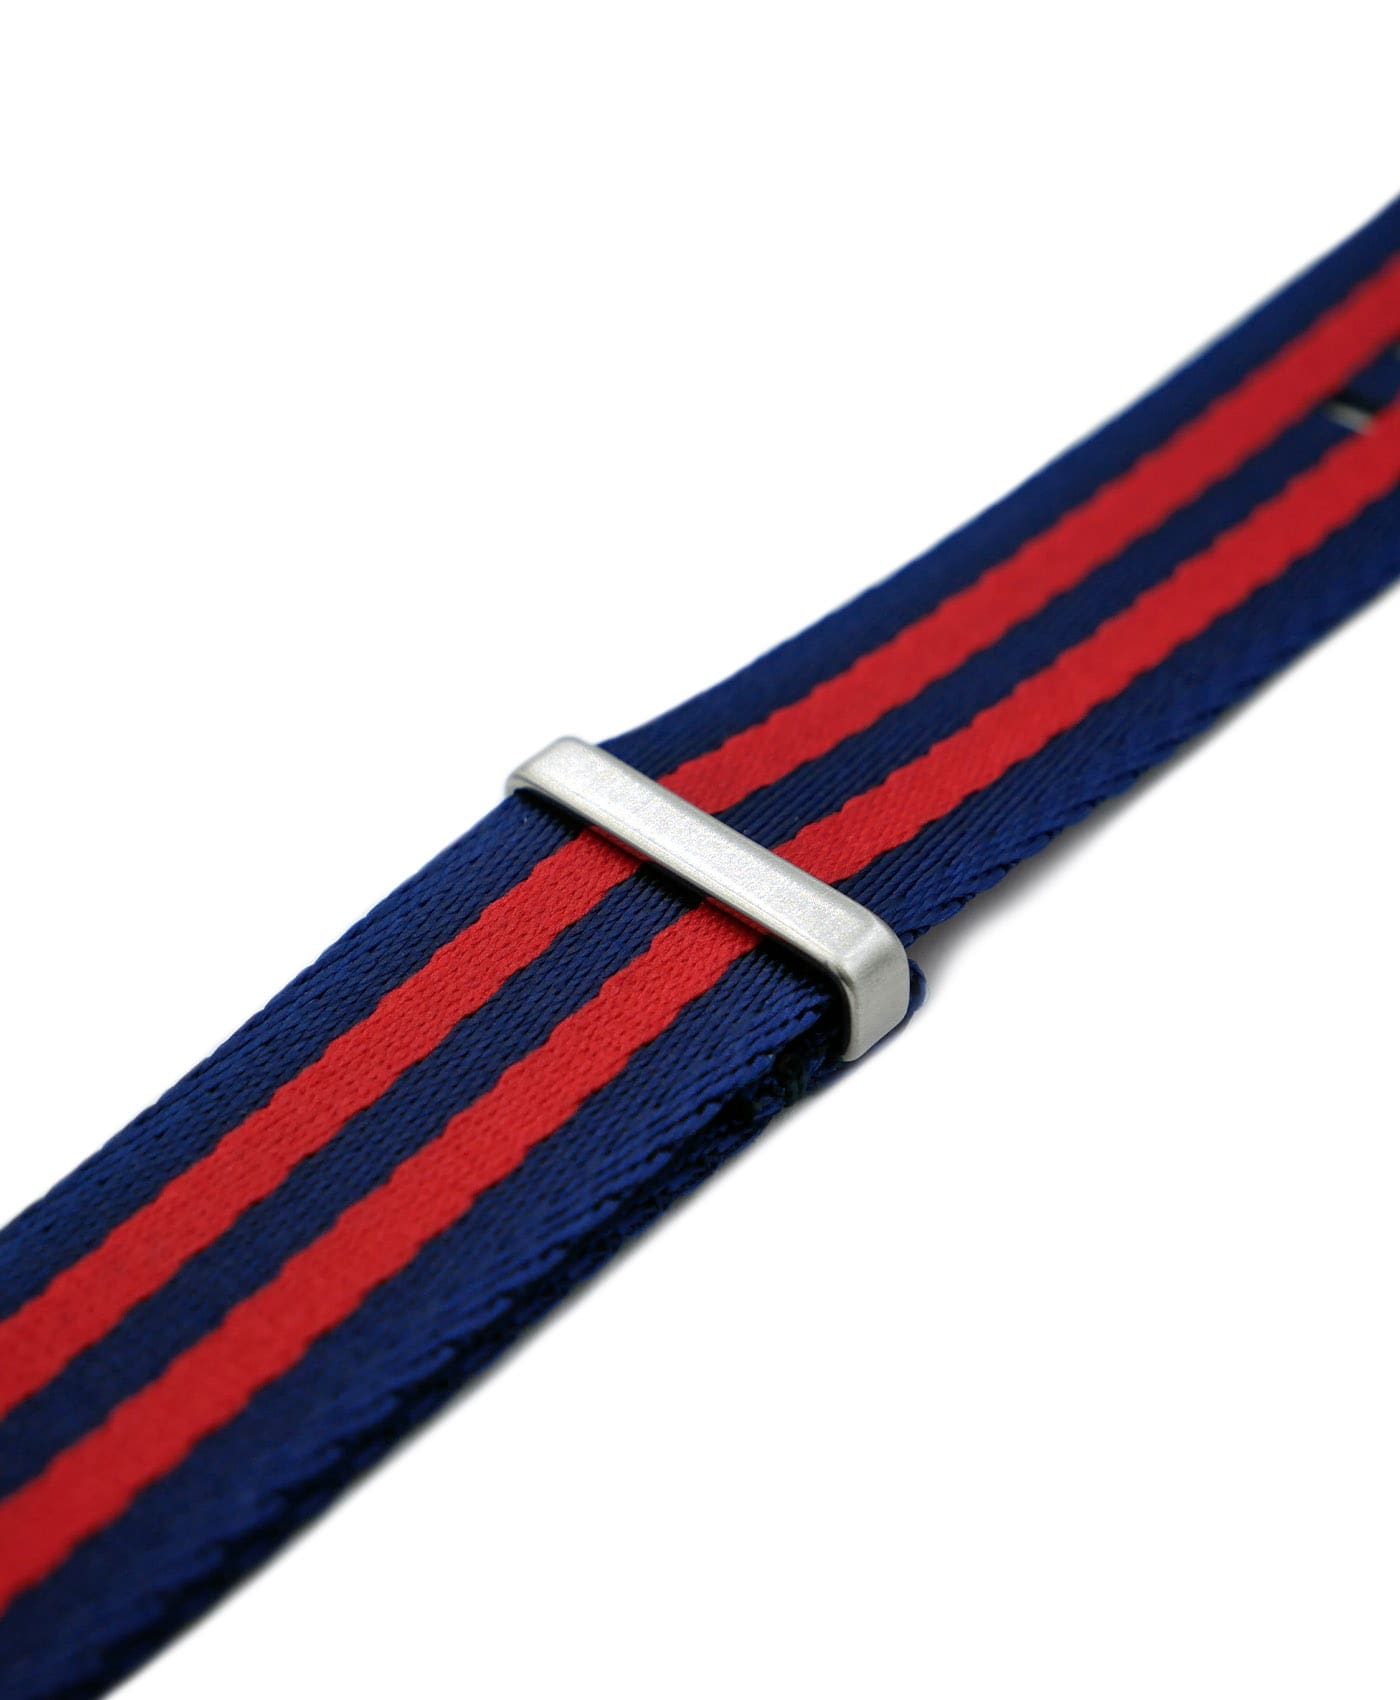 WB_premium_Nato-straps brushed_red blue striped_brushed hardware